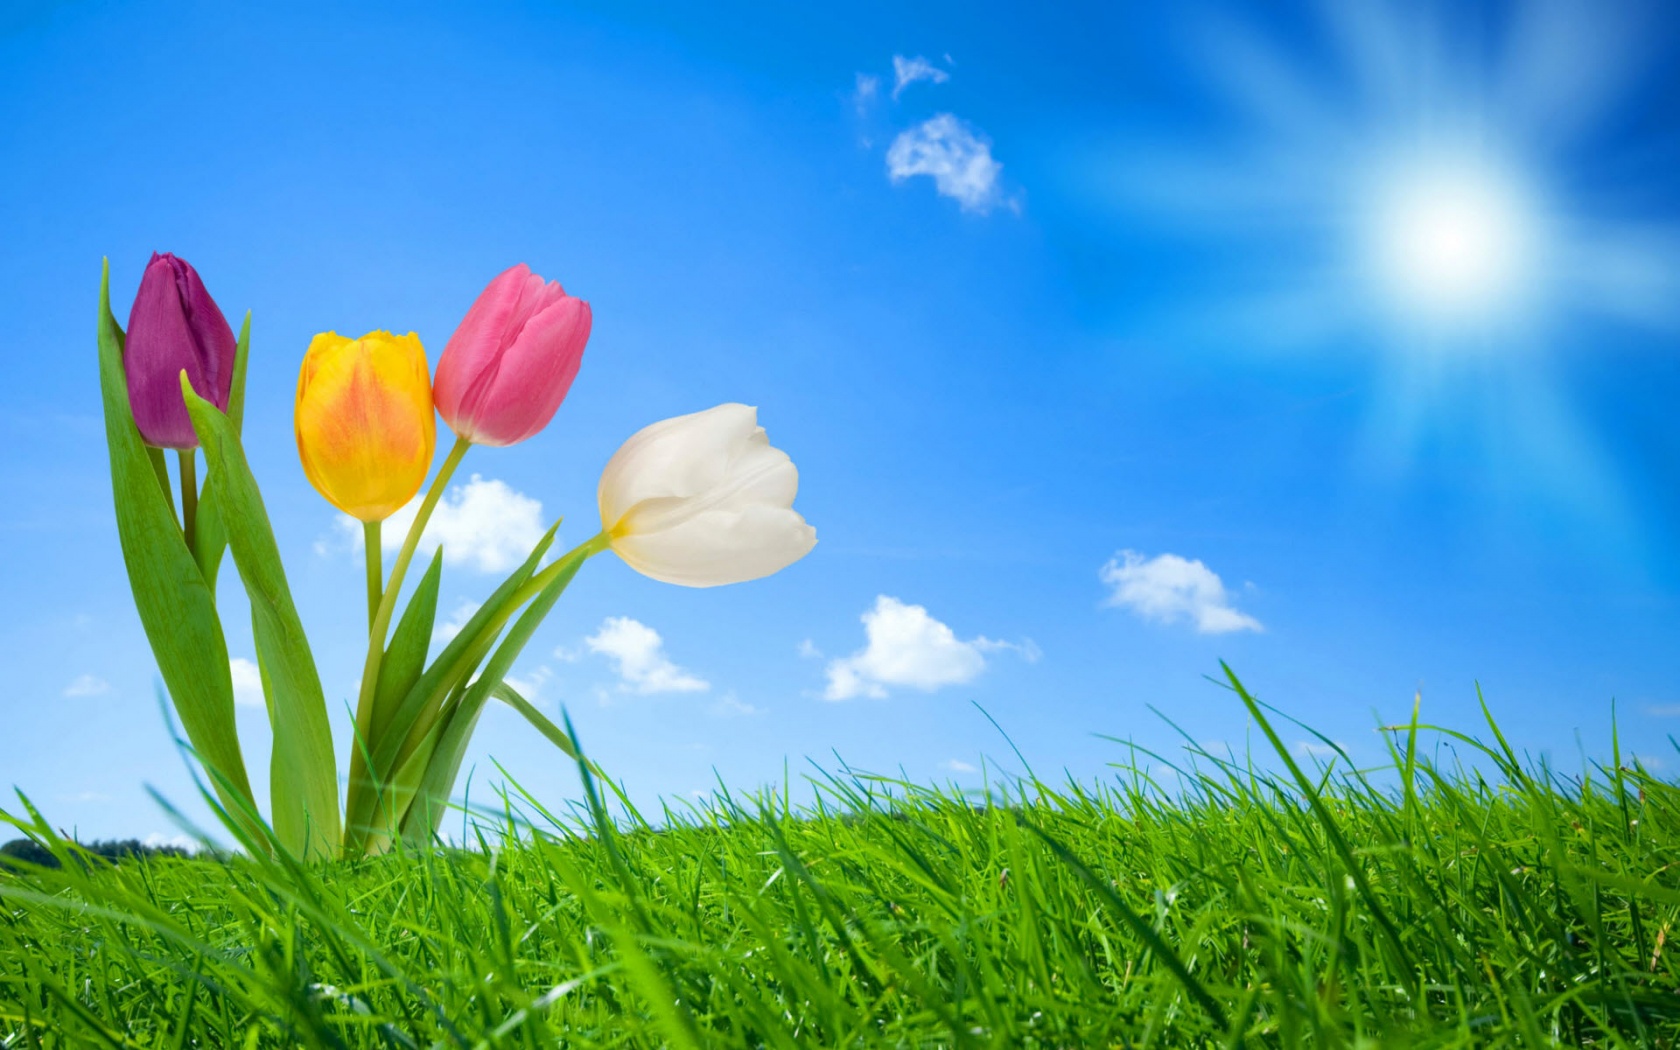  Download Spring Nature wallpaperdesktop background in 1680x1050